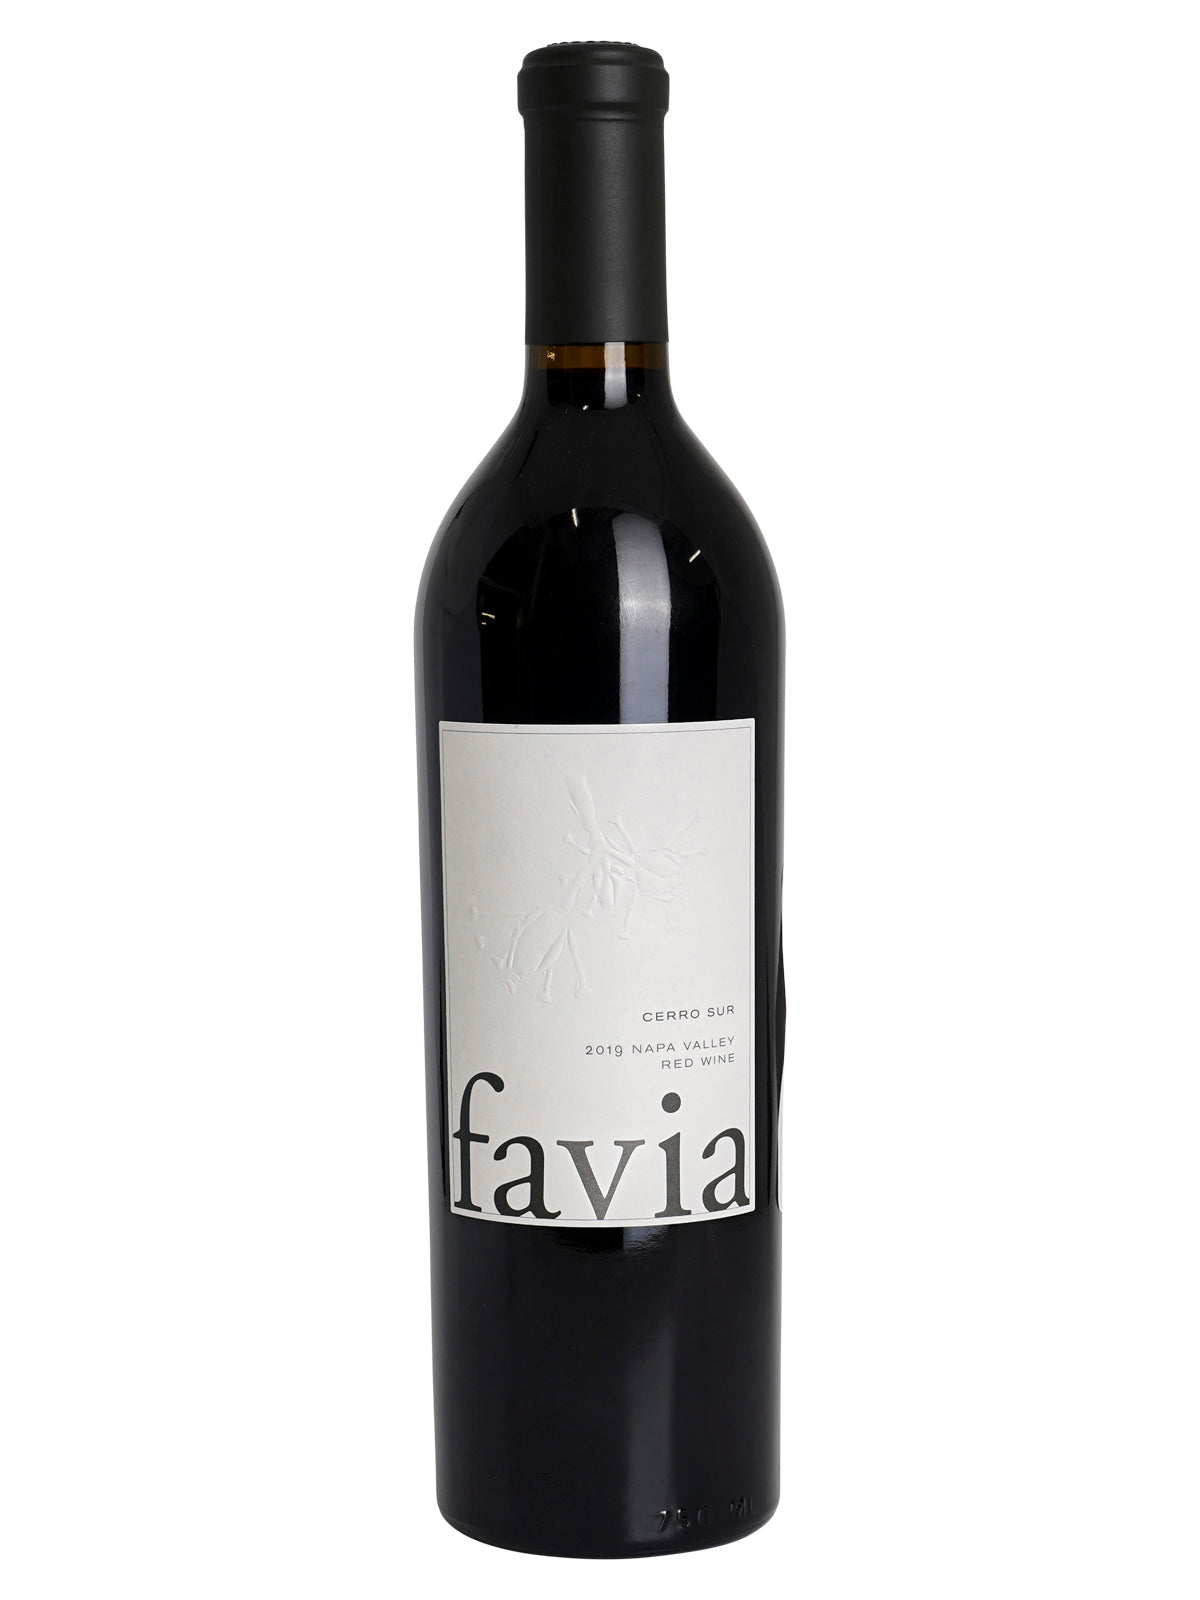 *7R* 2019 Favia "Cerro Sur" Red Wine (Napa Valley, CA)